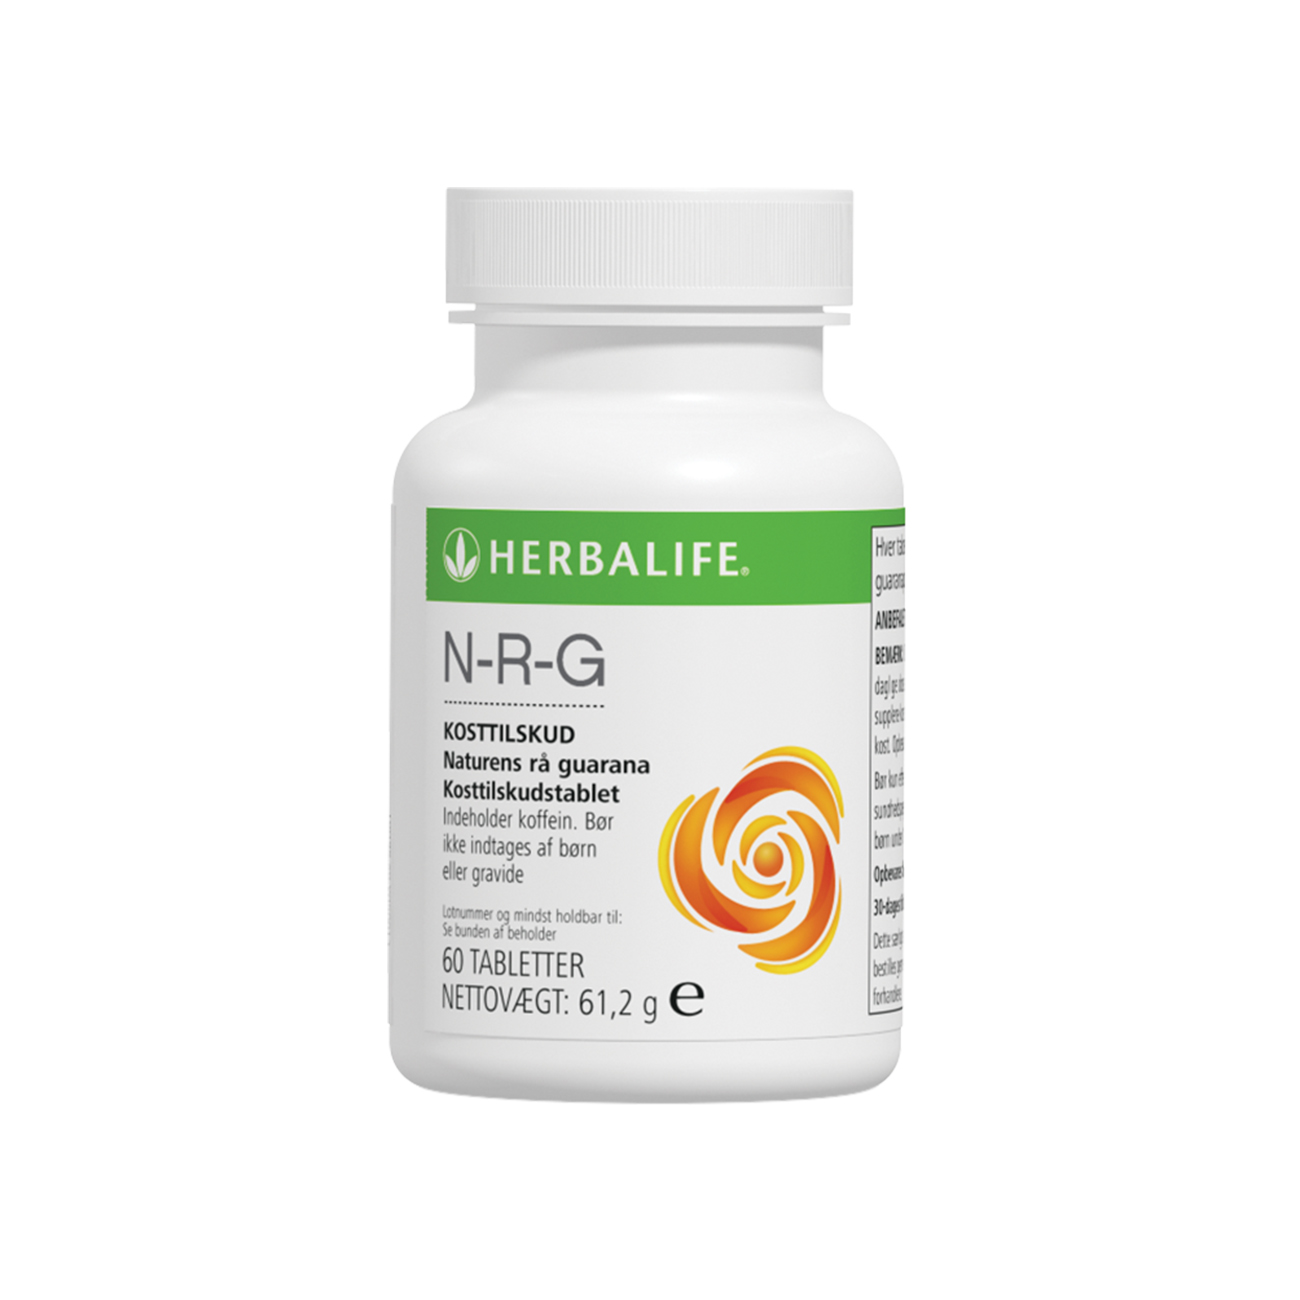 N-R-G Nature's Raw Guarana Koffeintilskud product